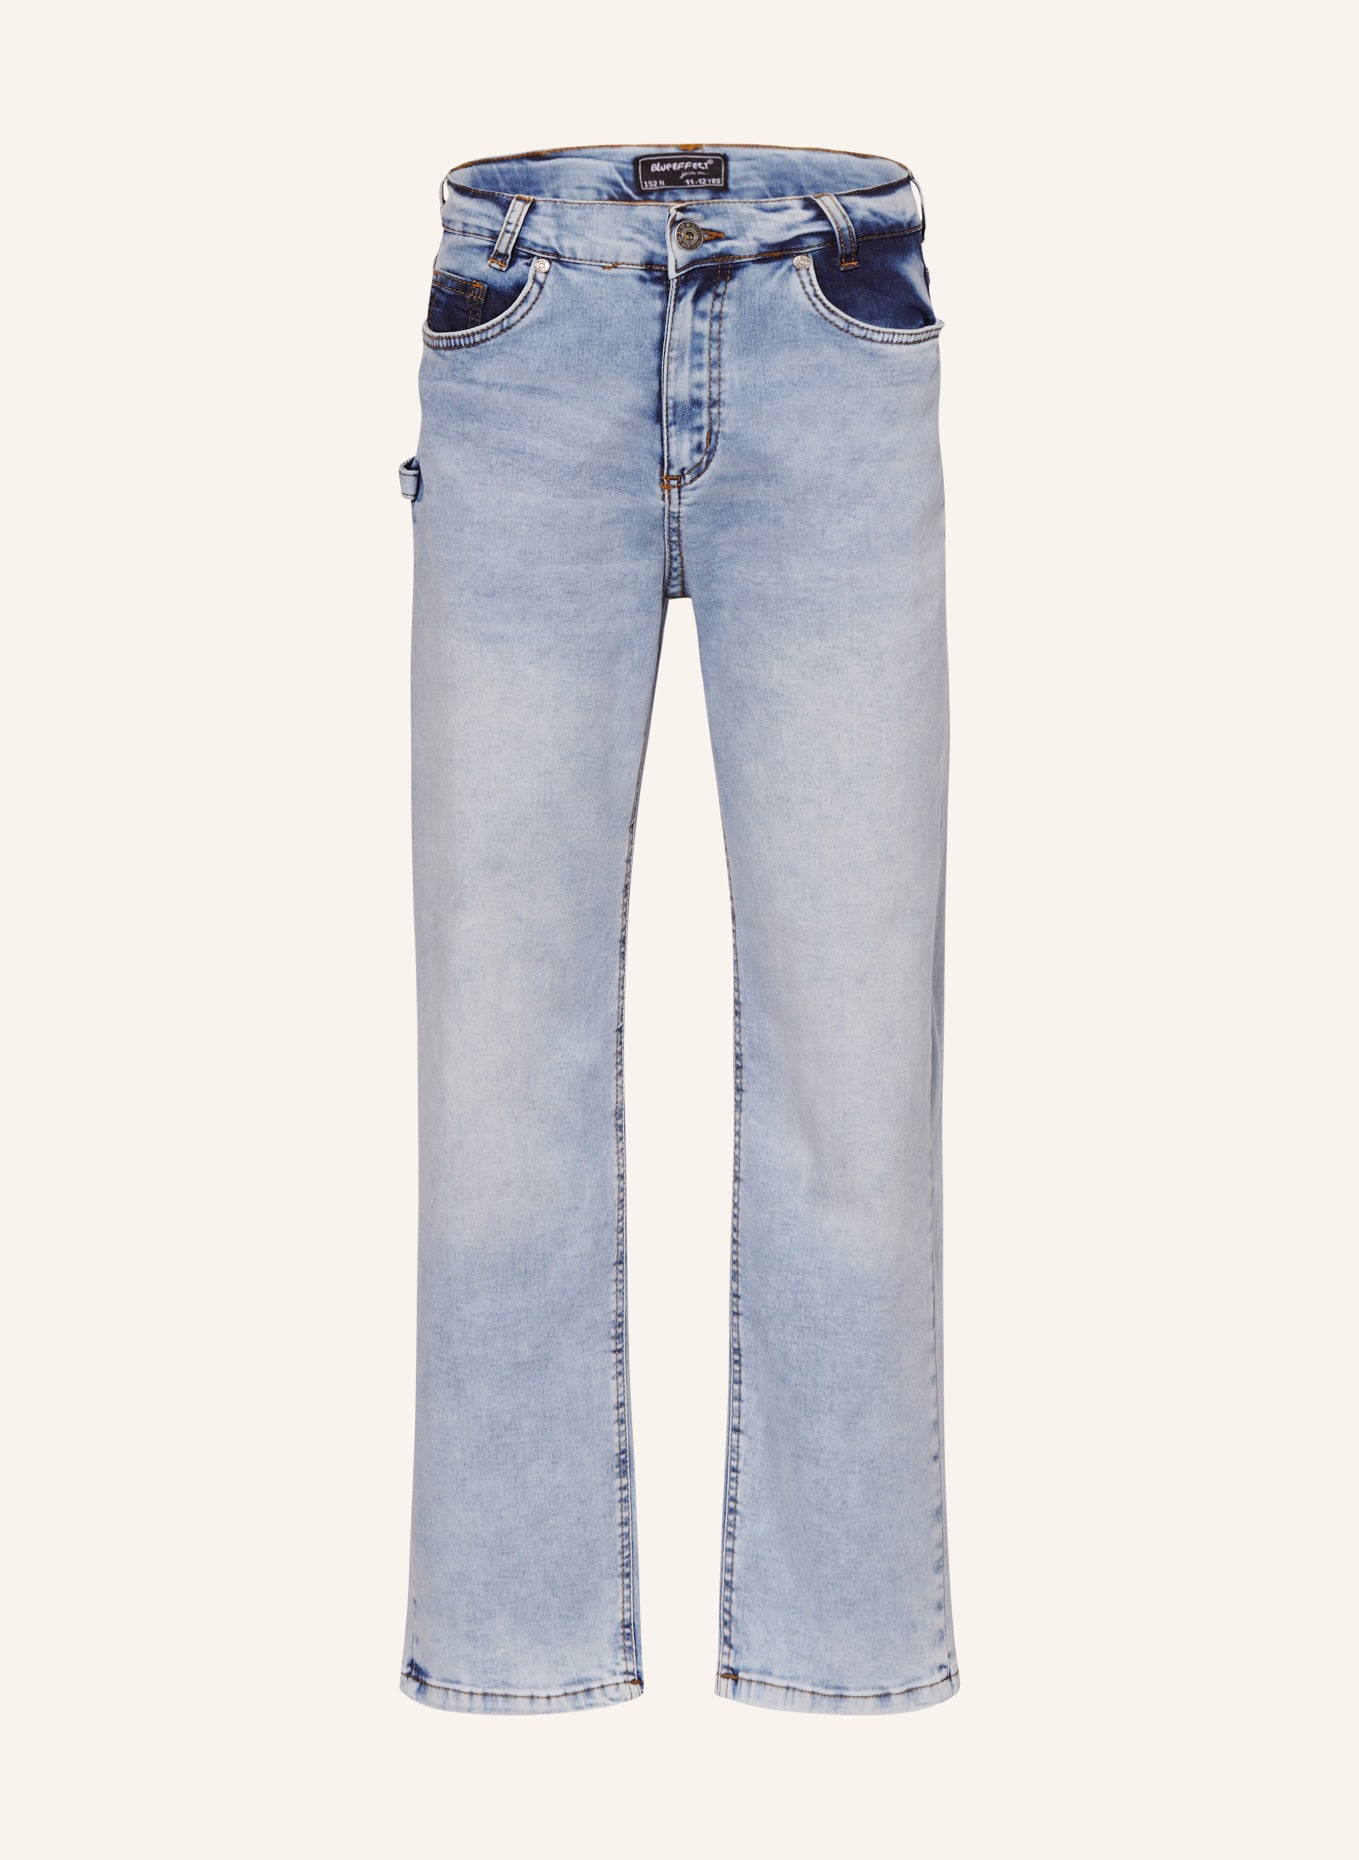 BLUE EFFECT Jeans 2856 Baggy Fit, Farbe: 9775 Light blue (Bild 1)